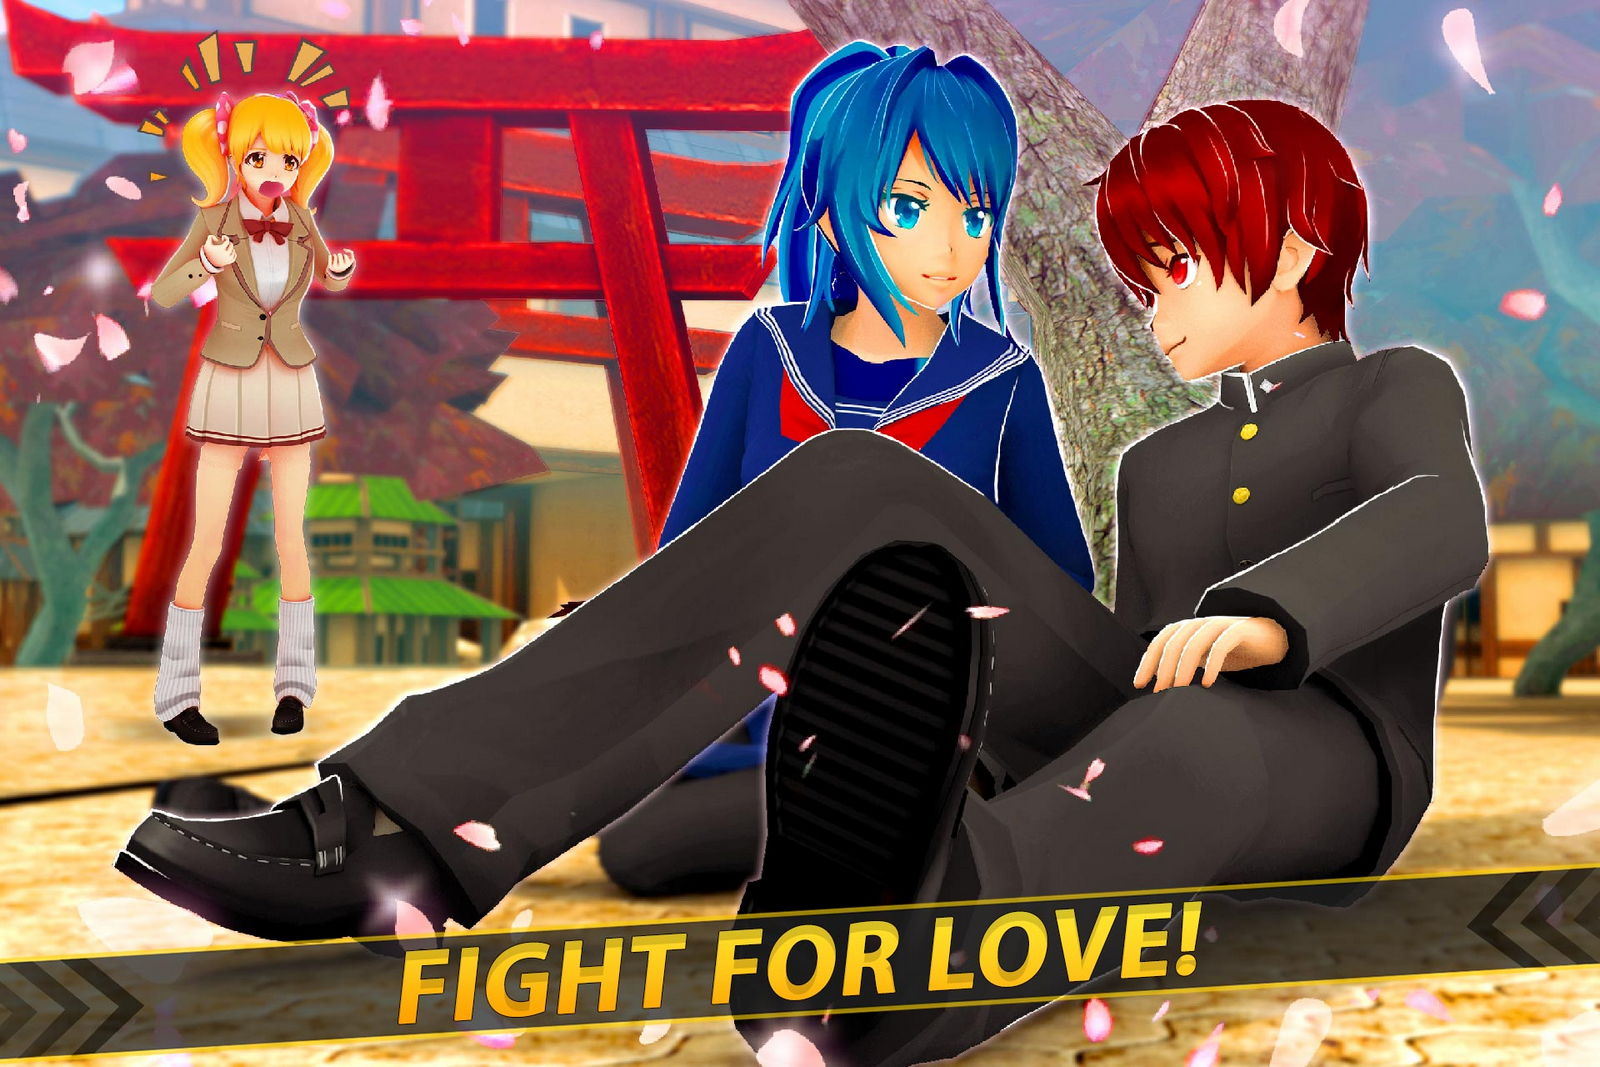 Starry Love Anime Dressup Otome Game Review Like Love Niki Wannabe  Fashionista or Mr Love Queens Choice  kawaiifluff